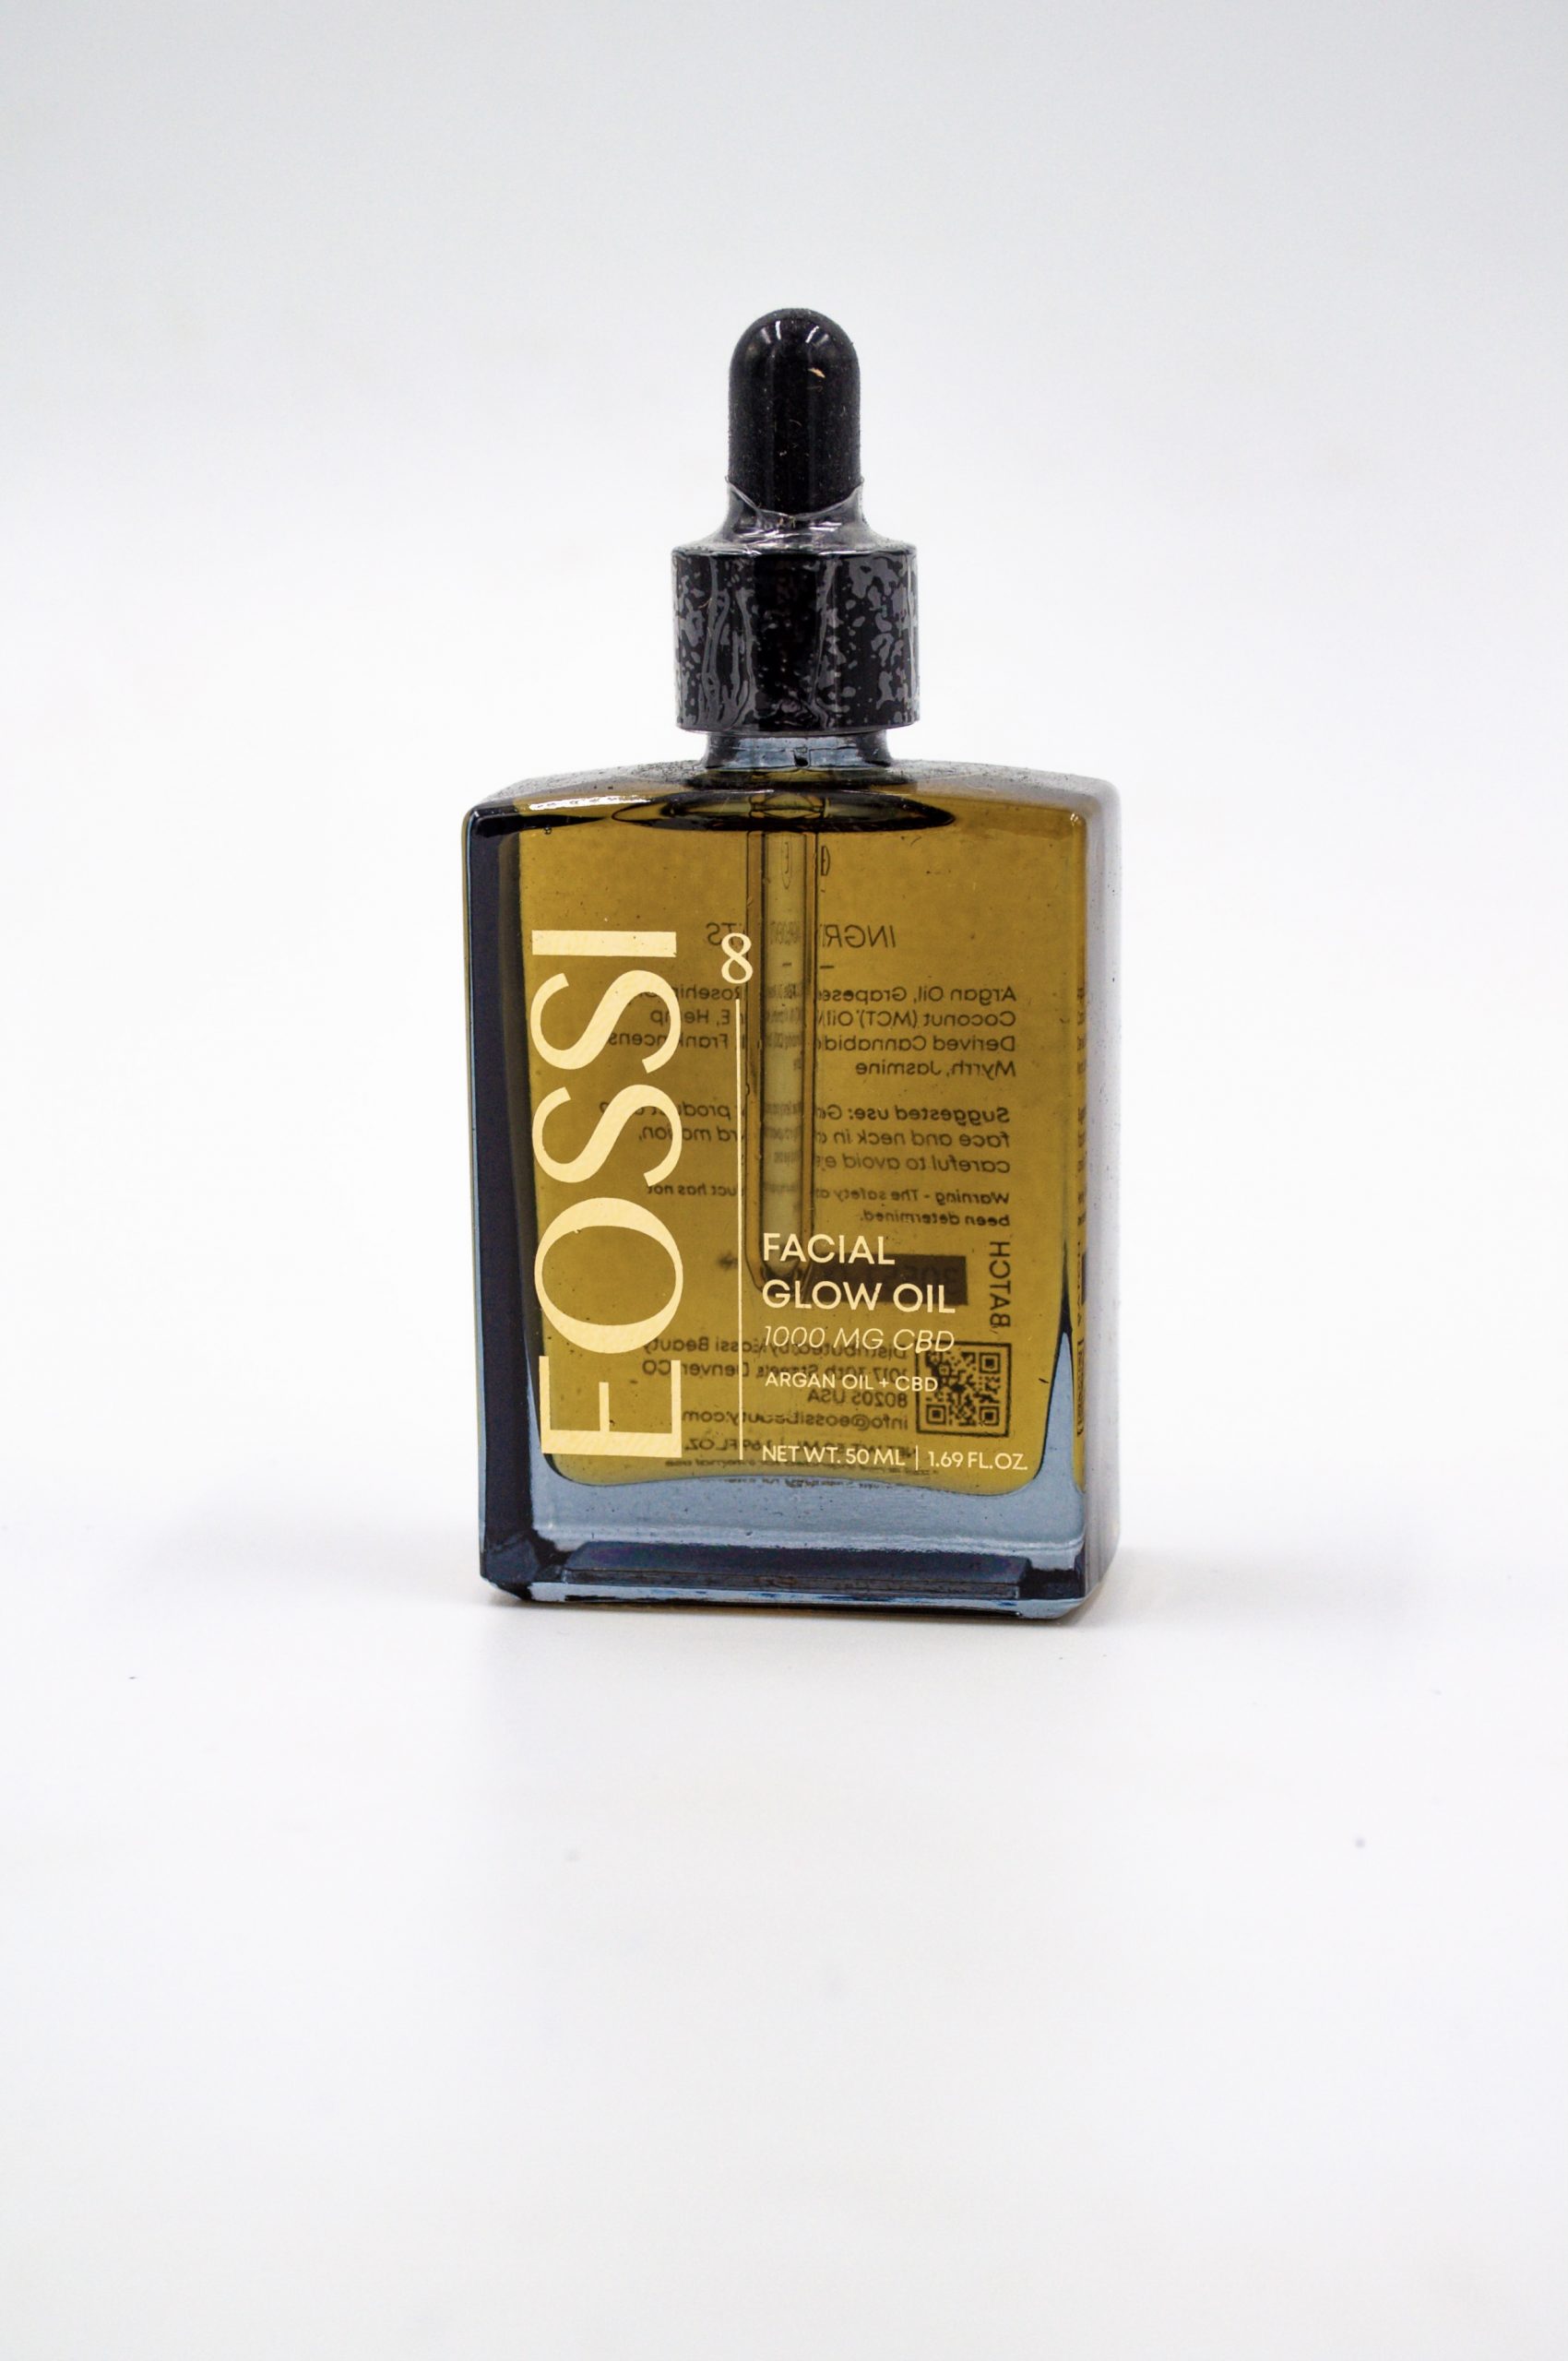 Eossi’s Facial Glow Oil